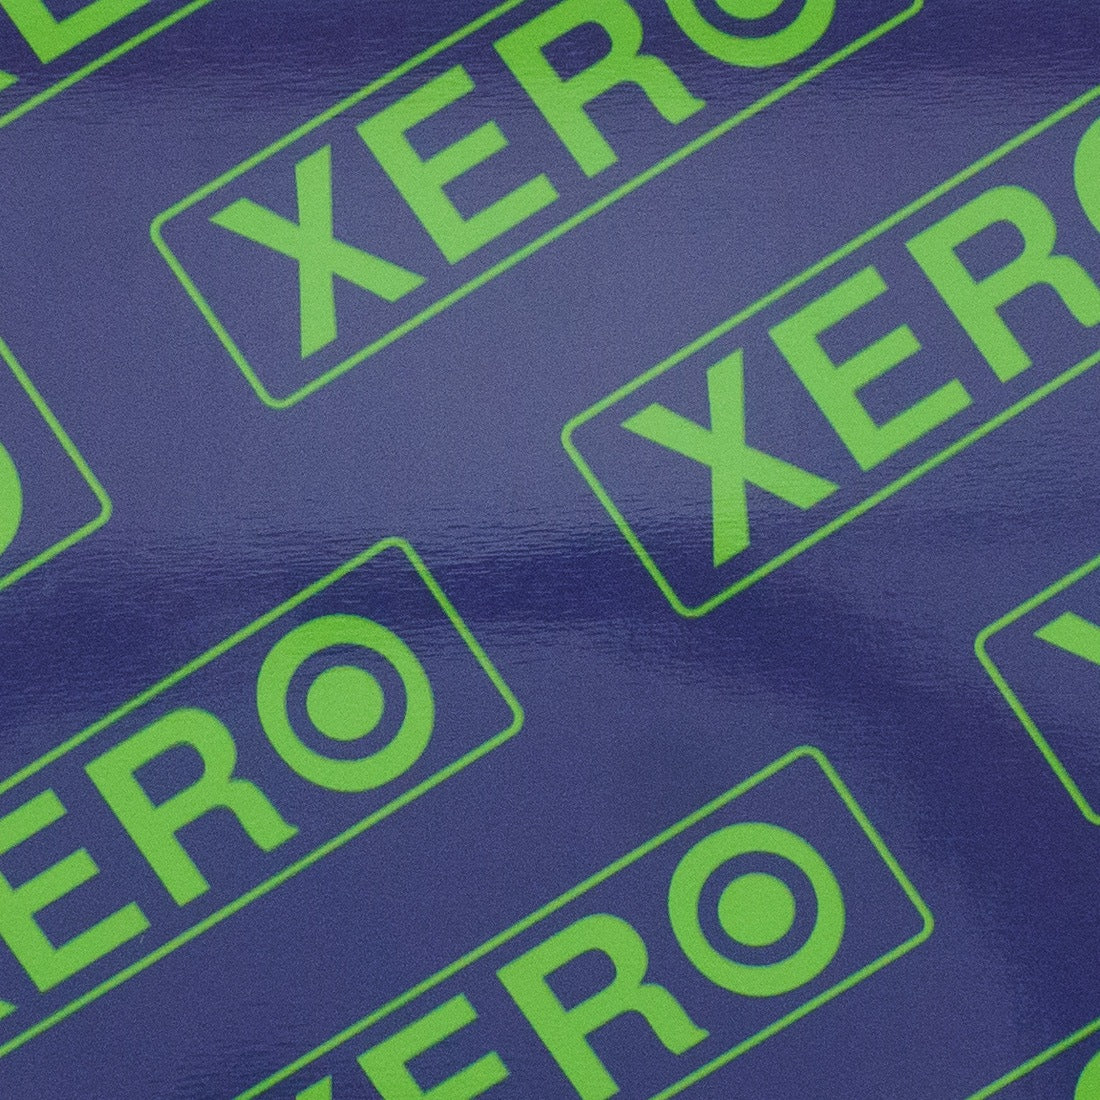 XERO Skateboard Deck - Repeat Logo Zoomed View